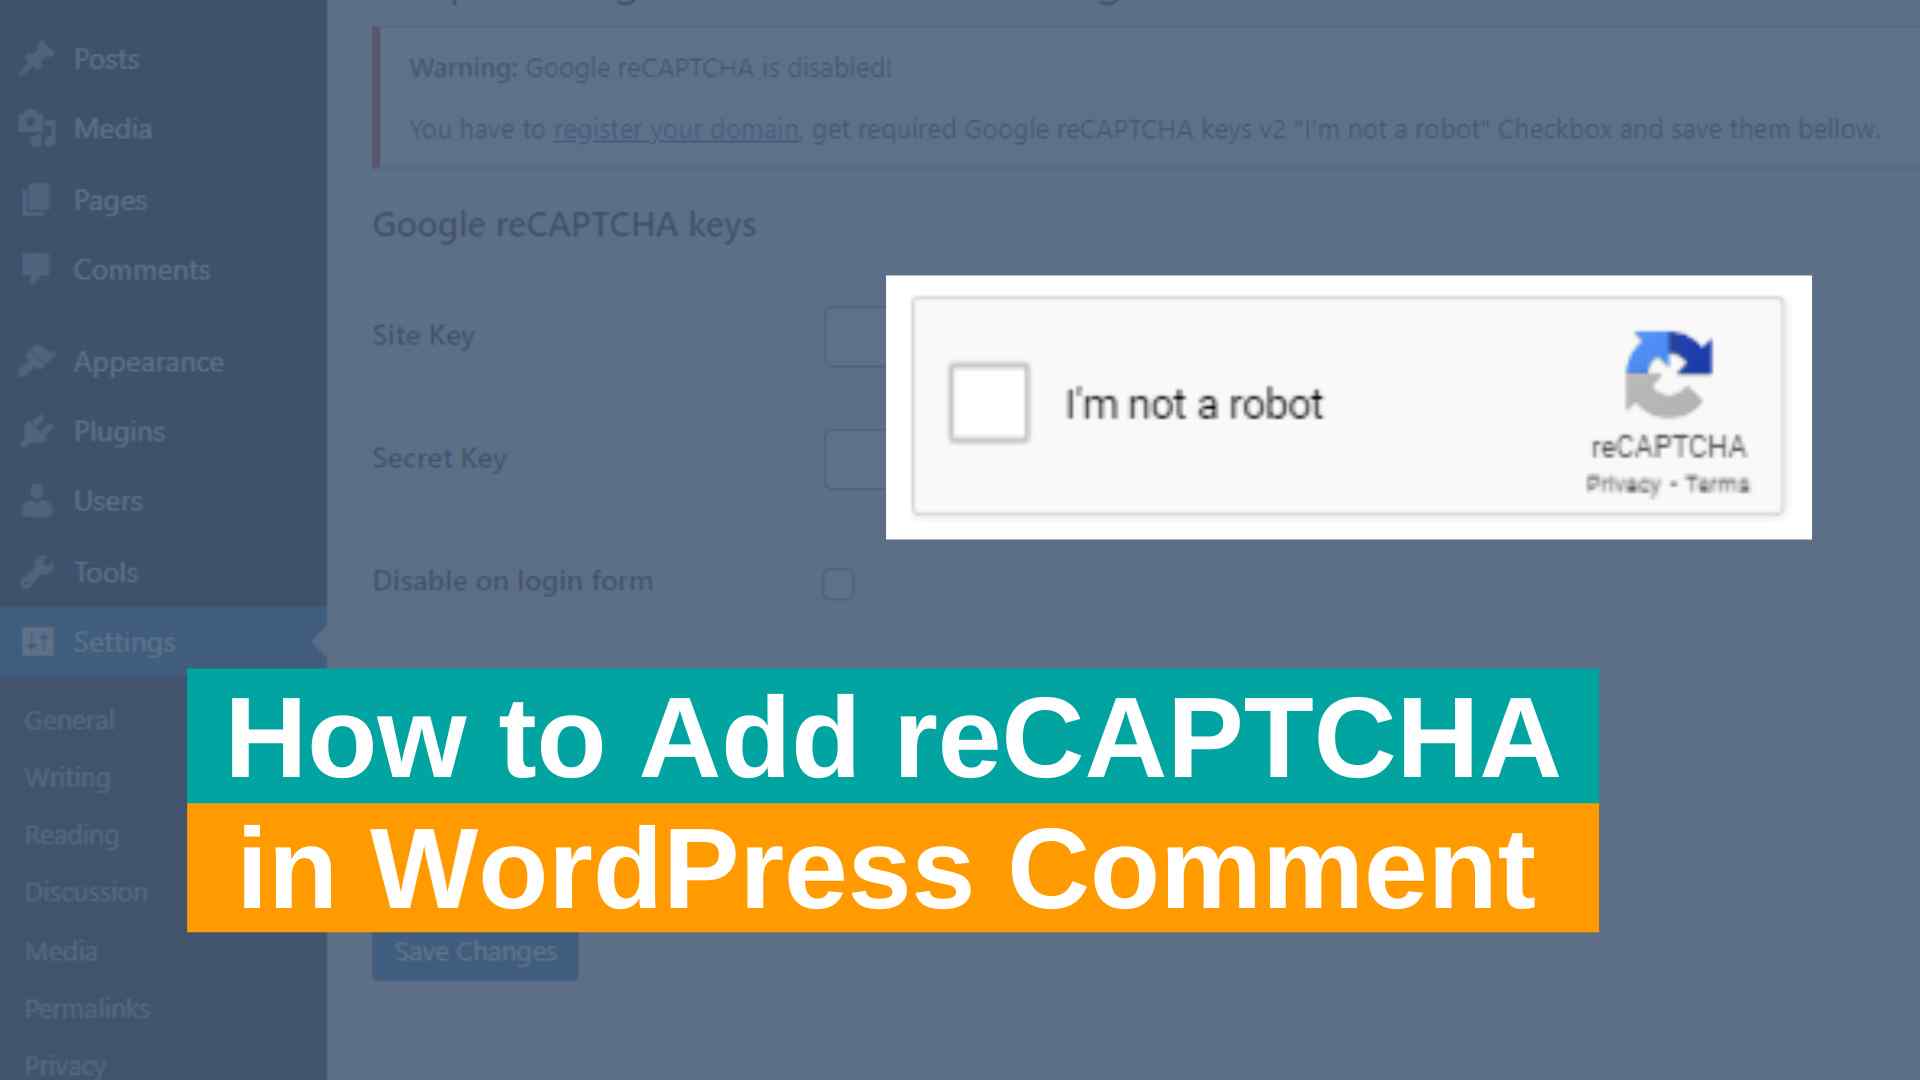 Add reCAPTCHA in WordPress Comment